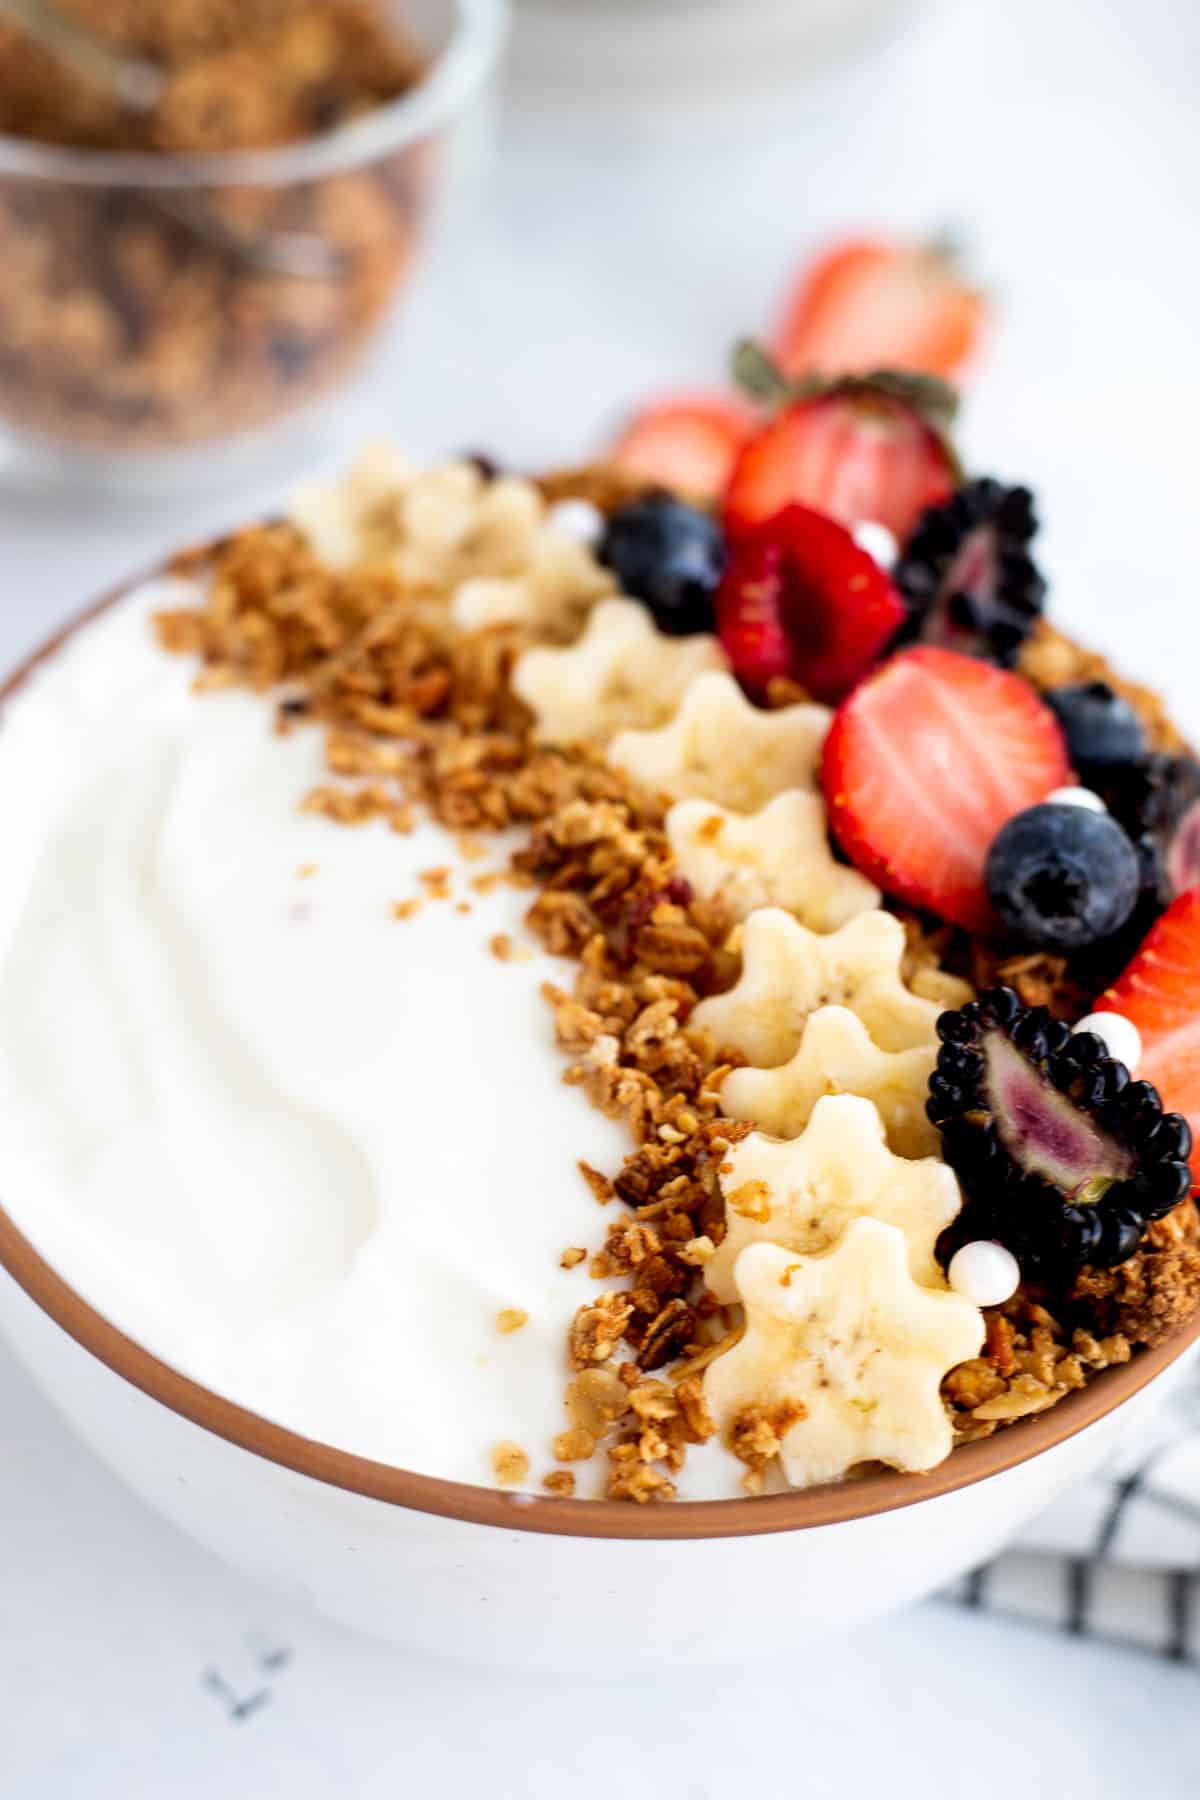 yogurt with granola, sliced bananas, and berries cut in half.